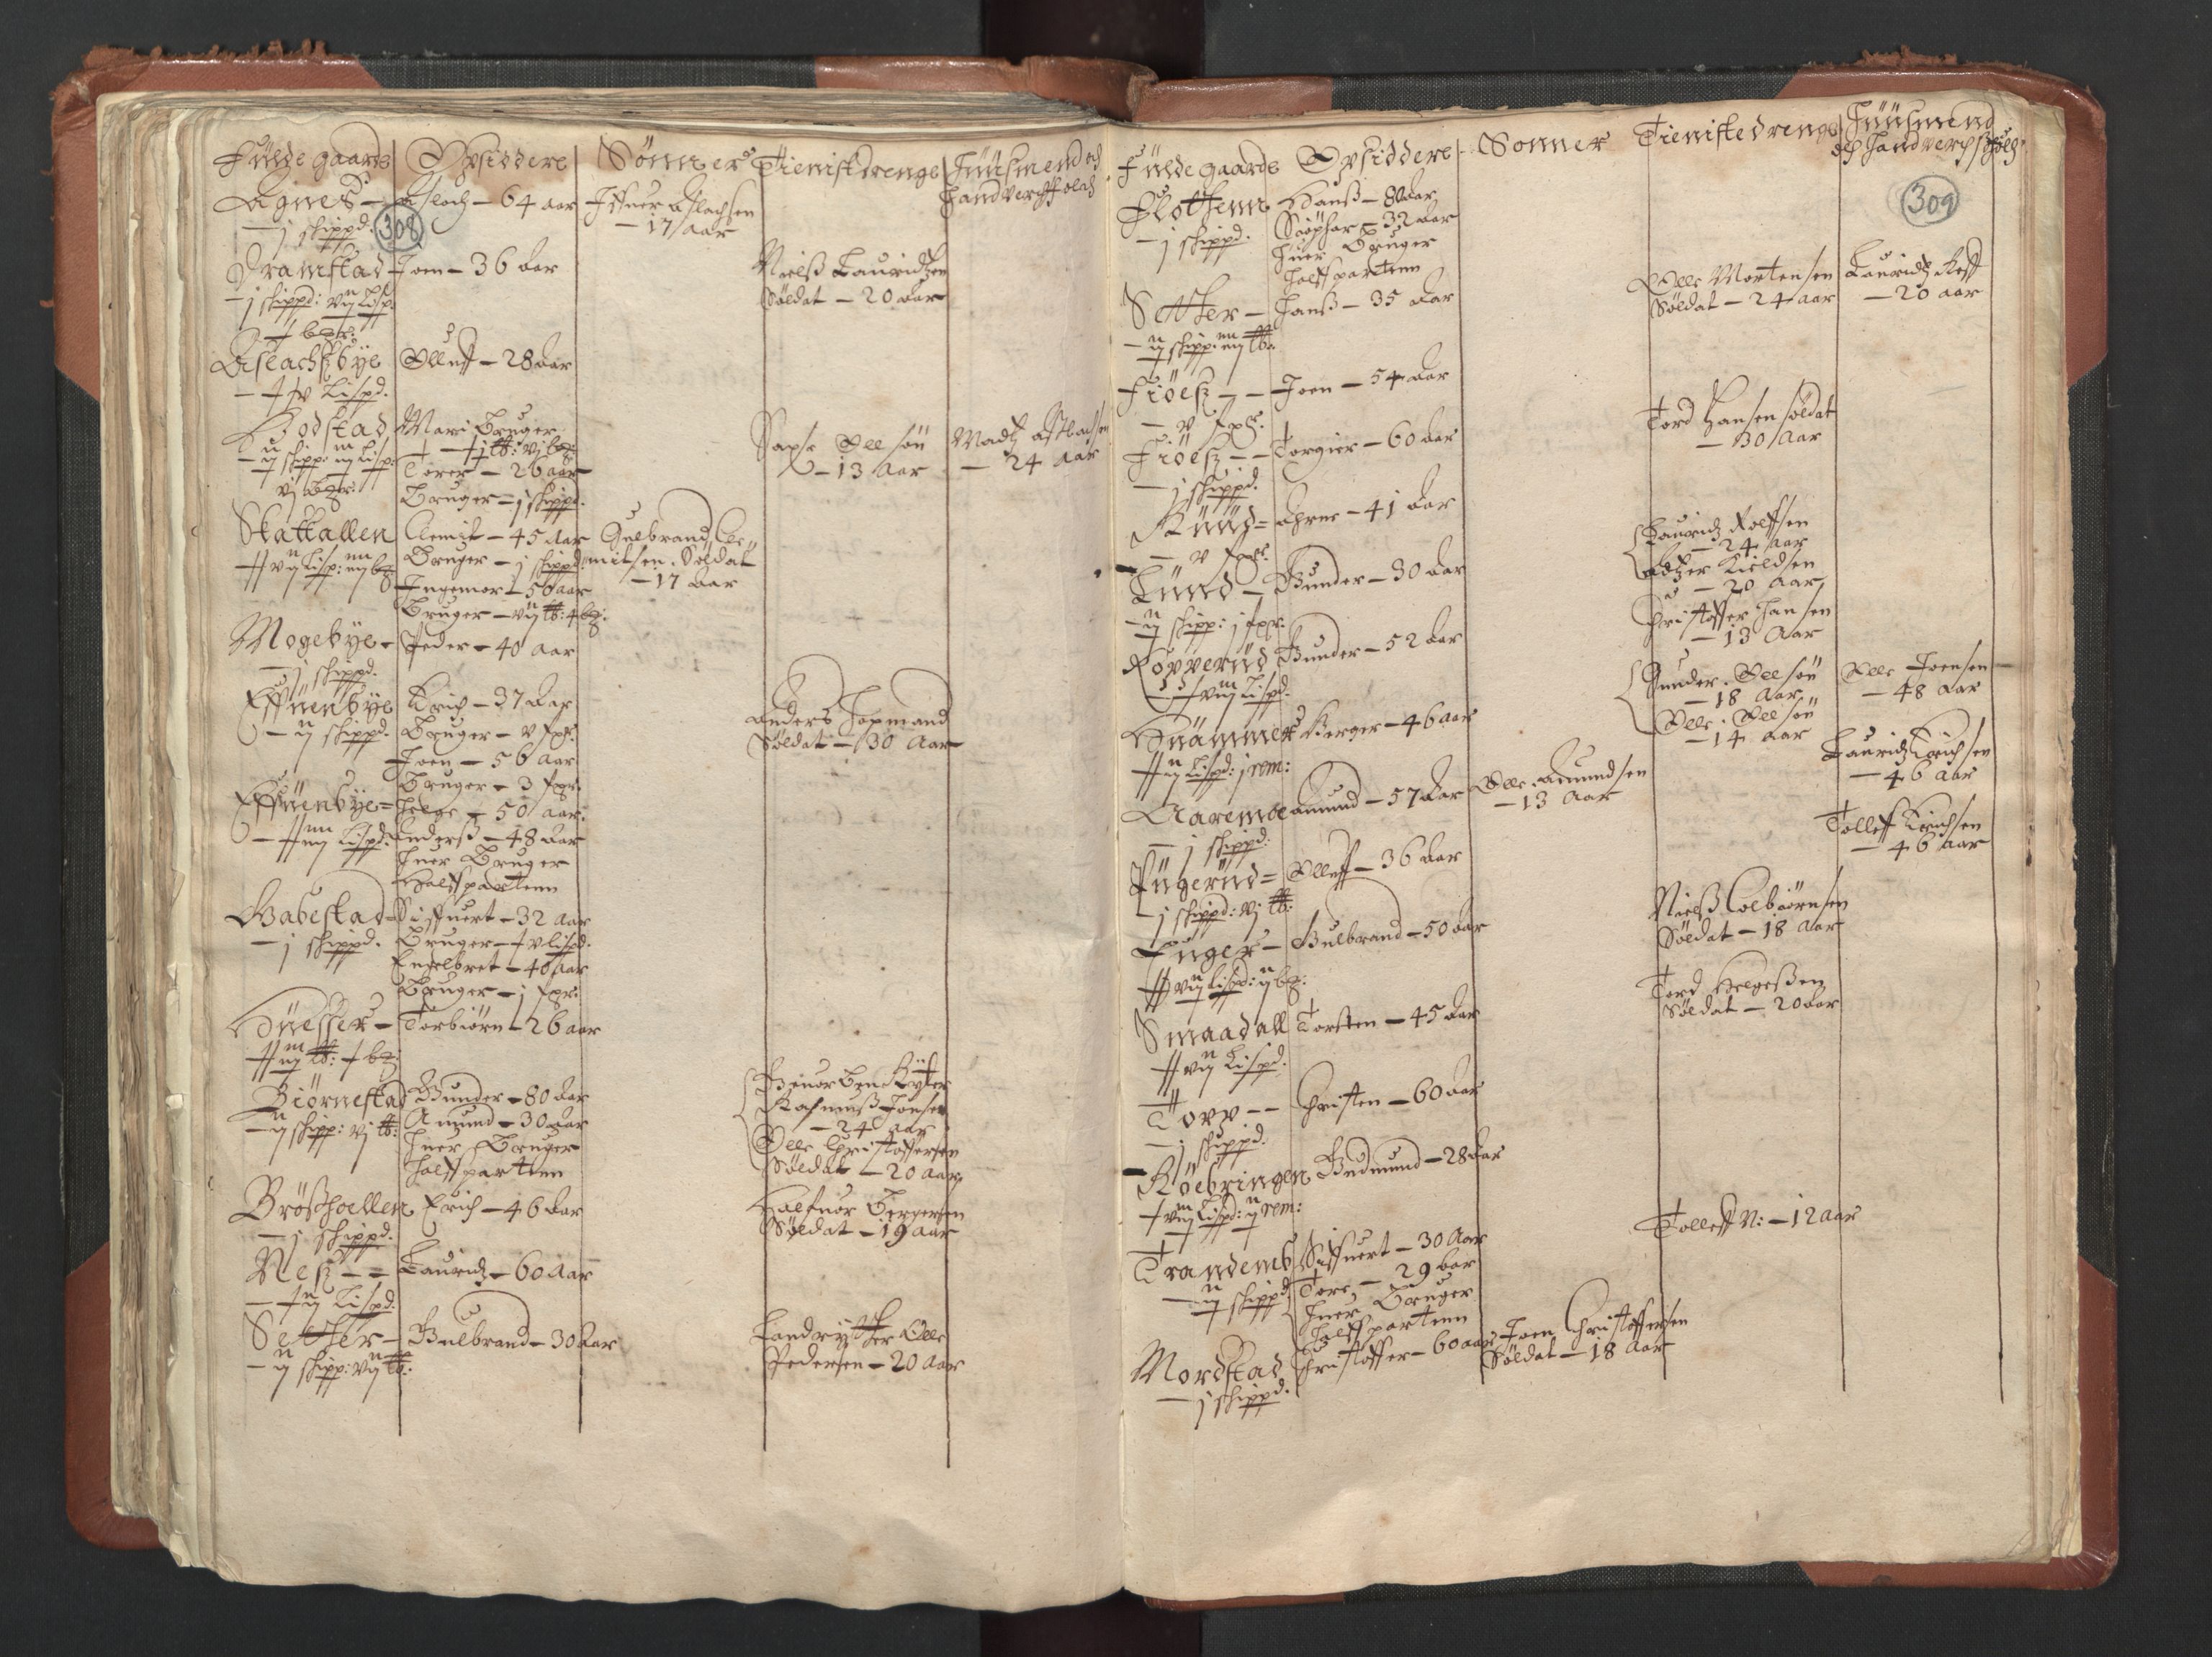 RA, Fogdenes og sorenskrivernes manntall 1664-1666, nr. 1: Fogderier (len og skipreider) i nåværende Østfold fylke, 1664, s. 308-309